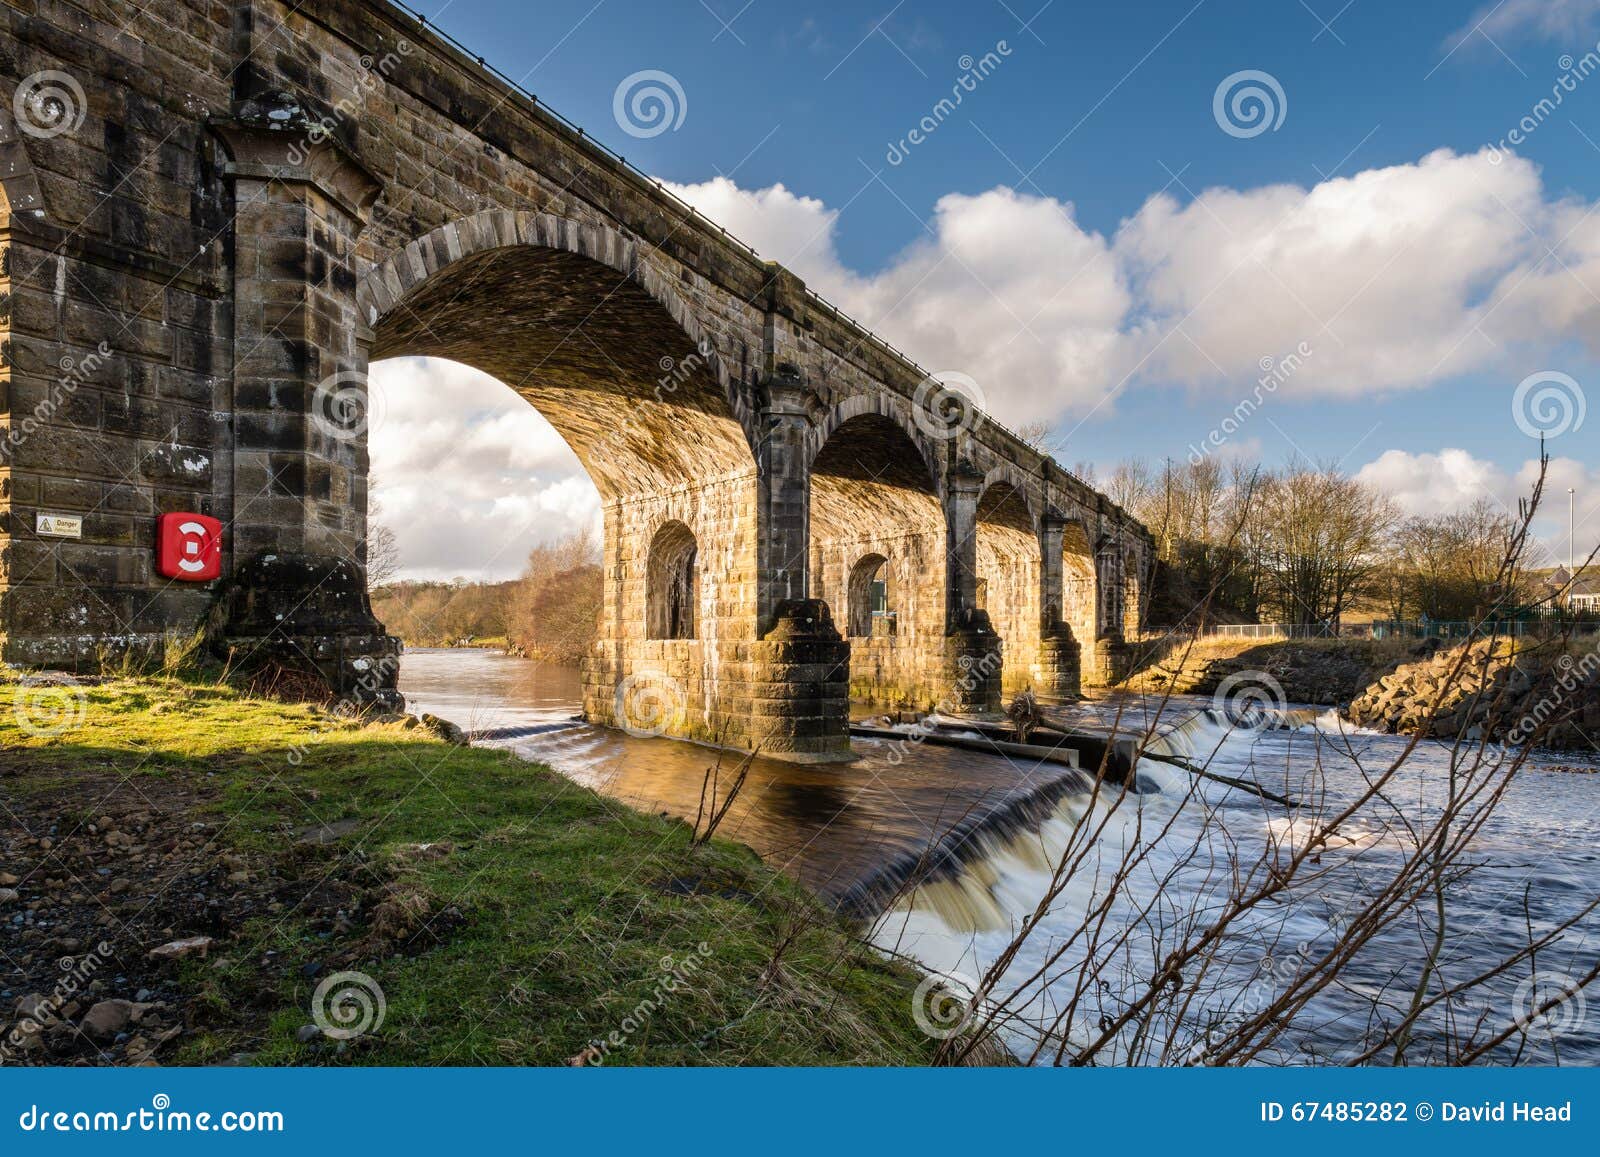 haltwhistle skew arches viaduct